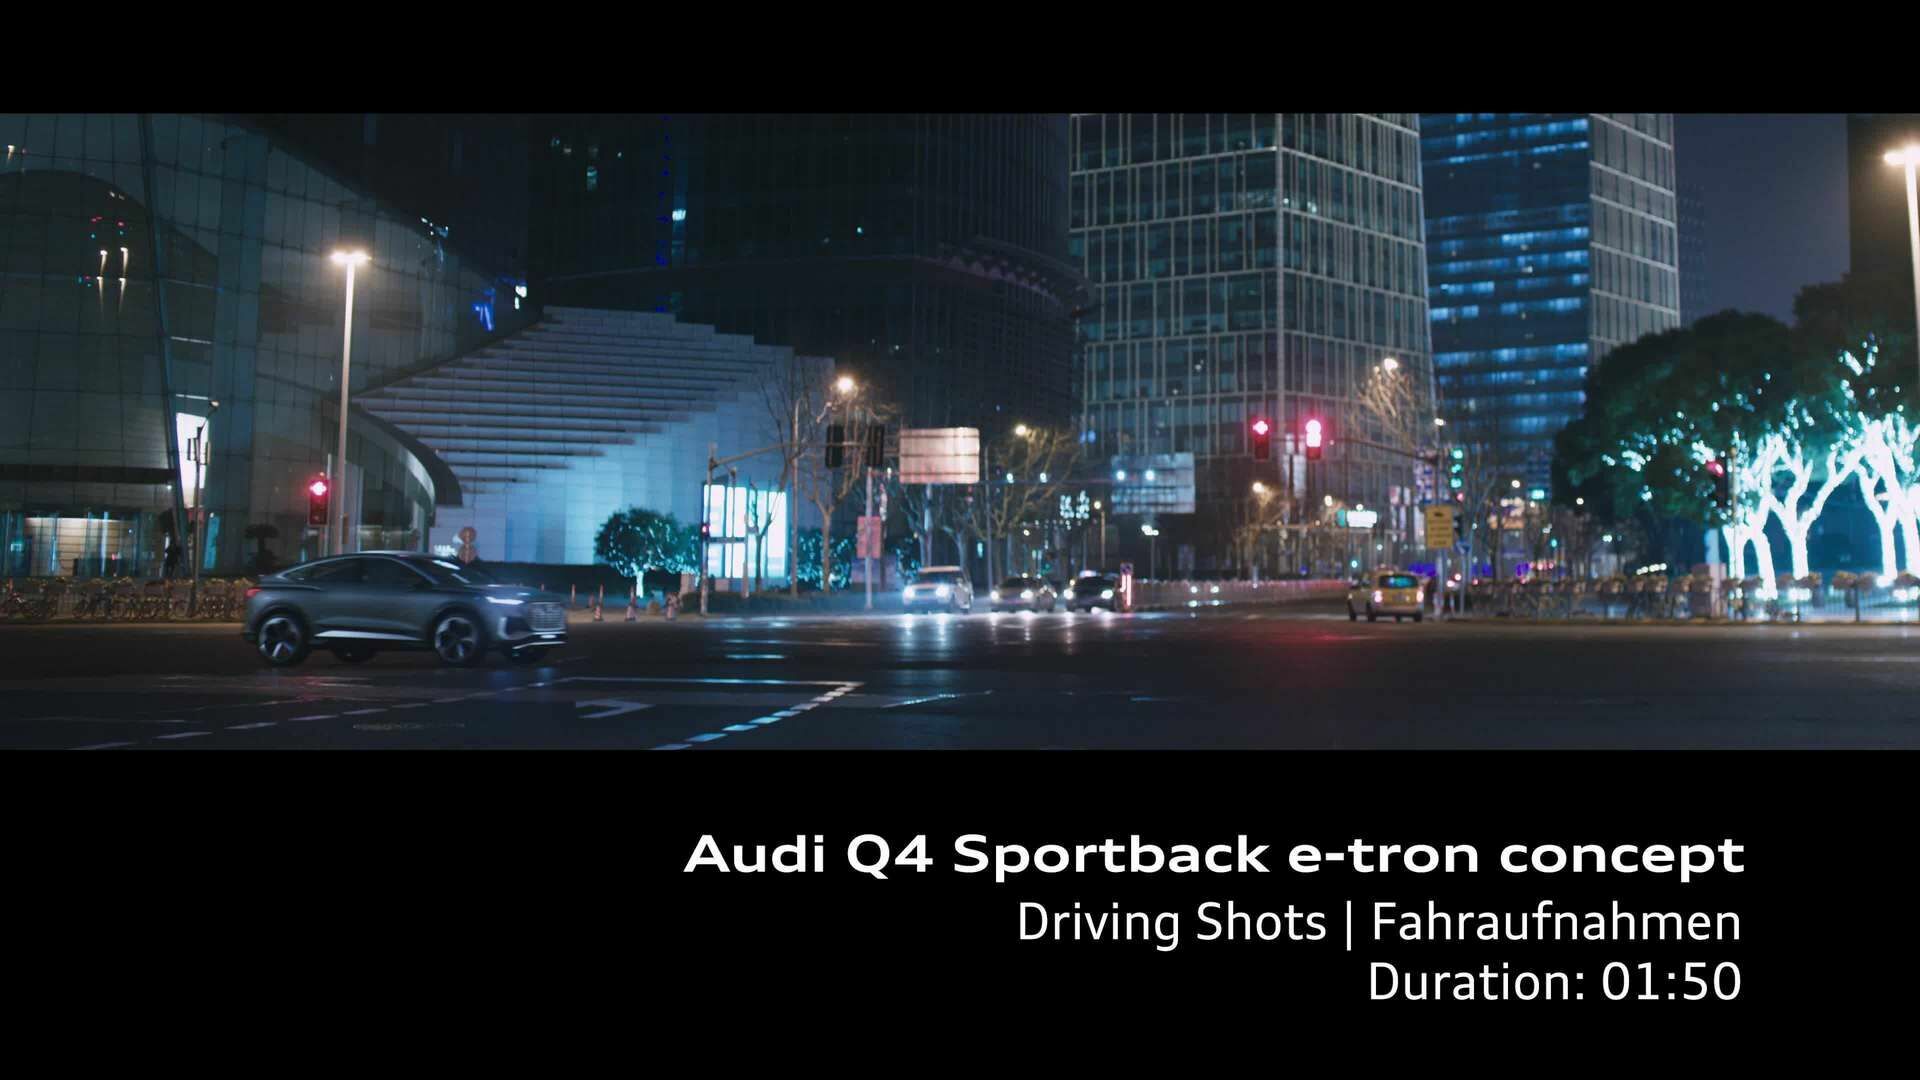 Footage: Audi Q4 Sportback e-tron driving shots